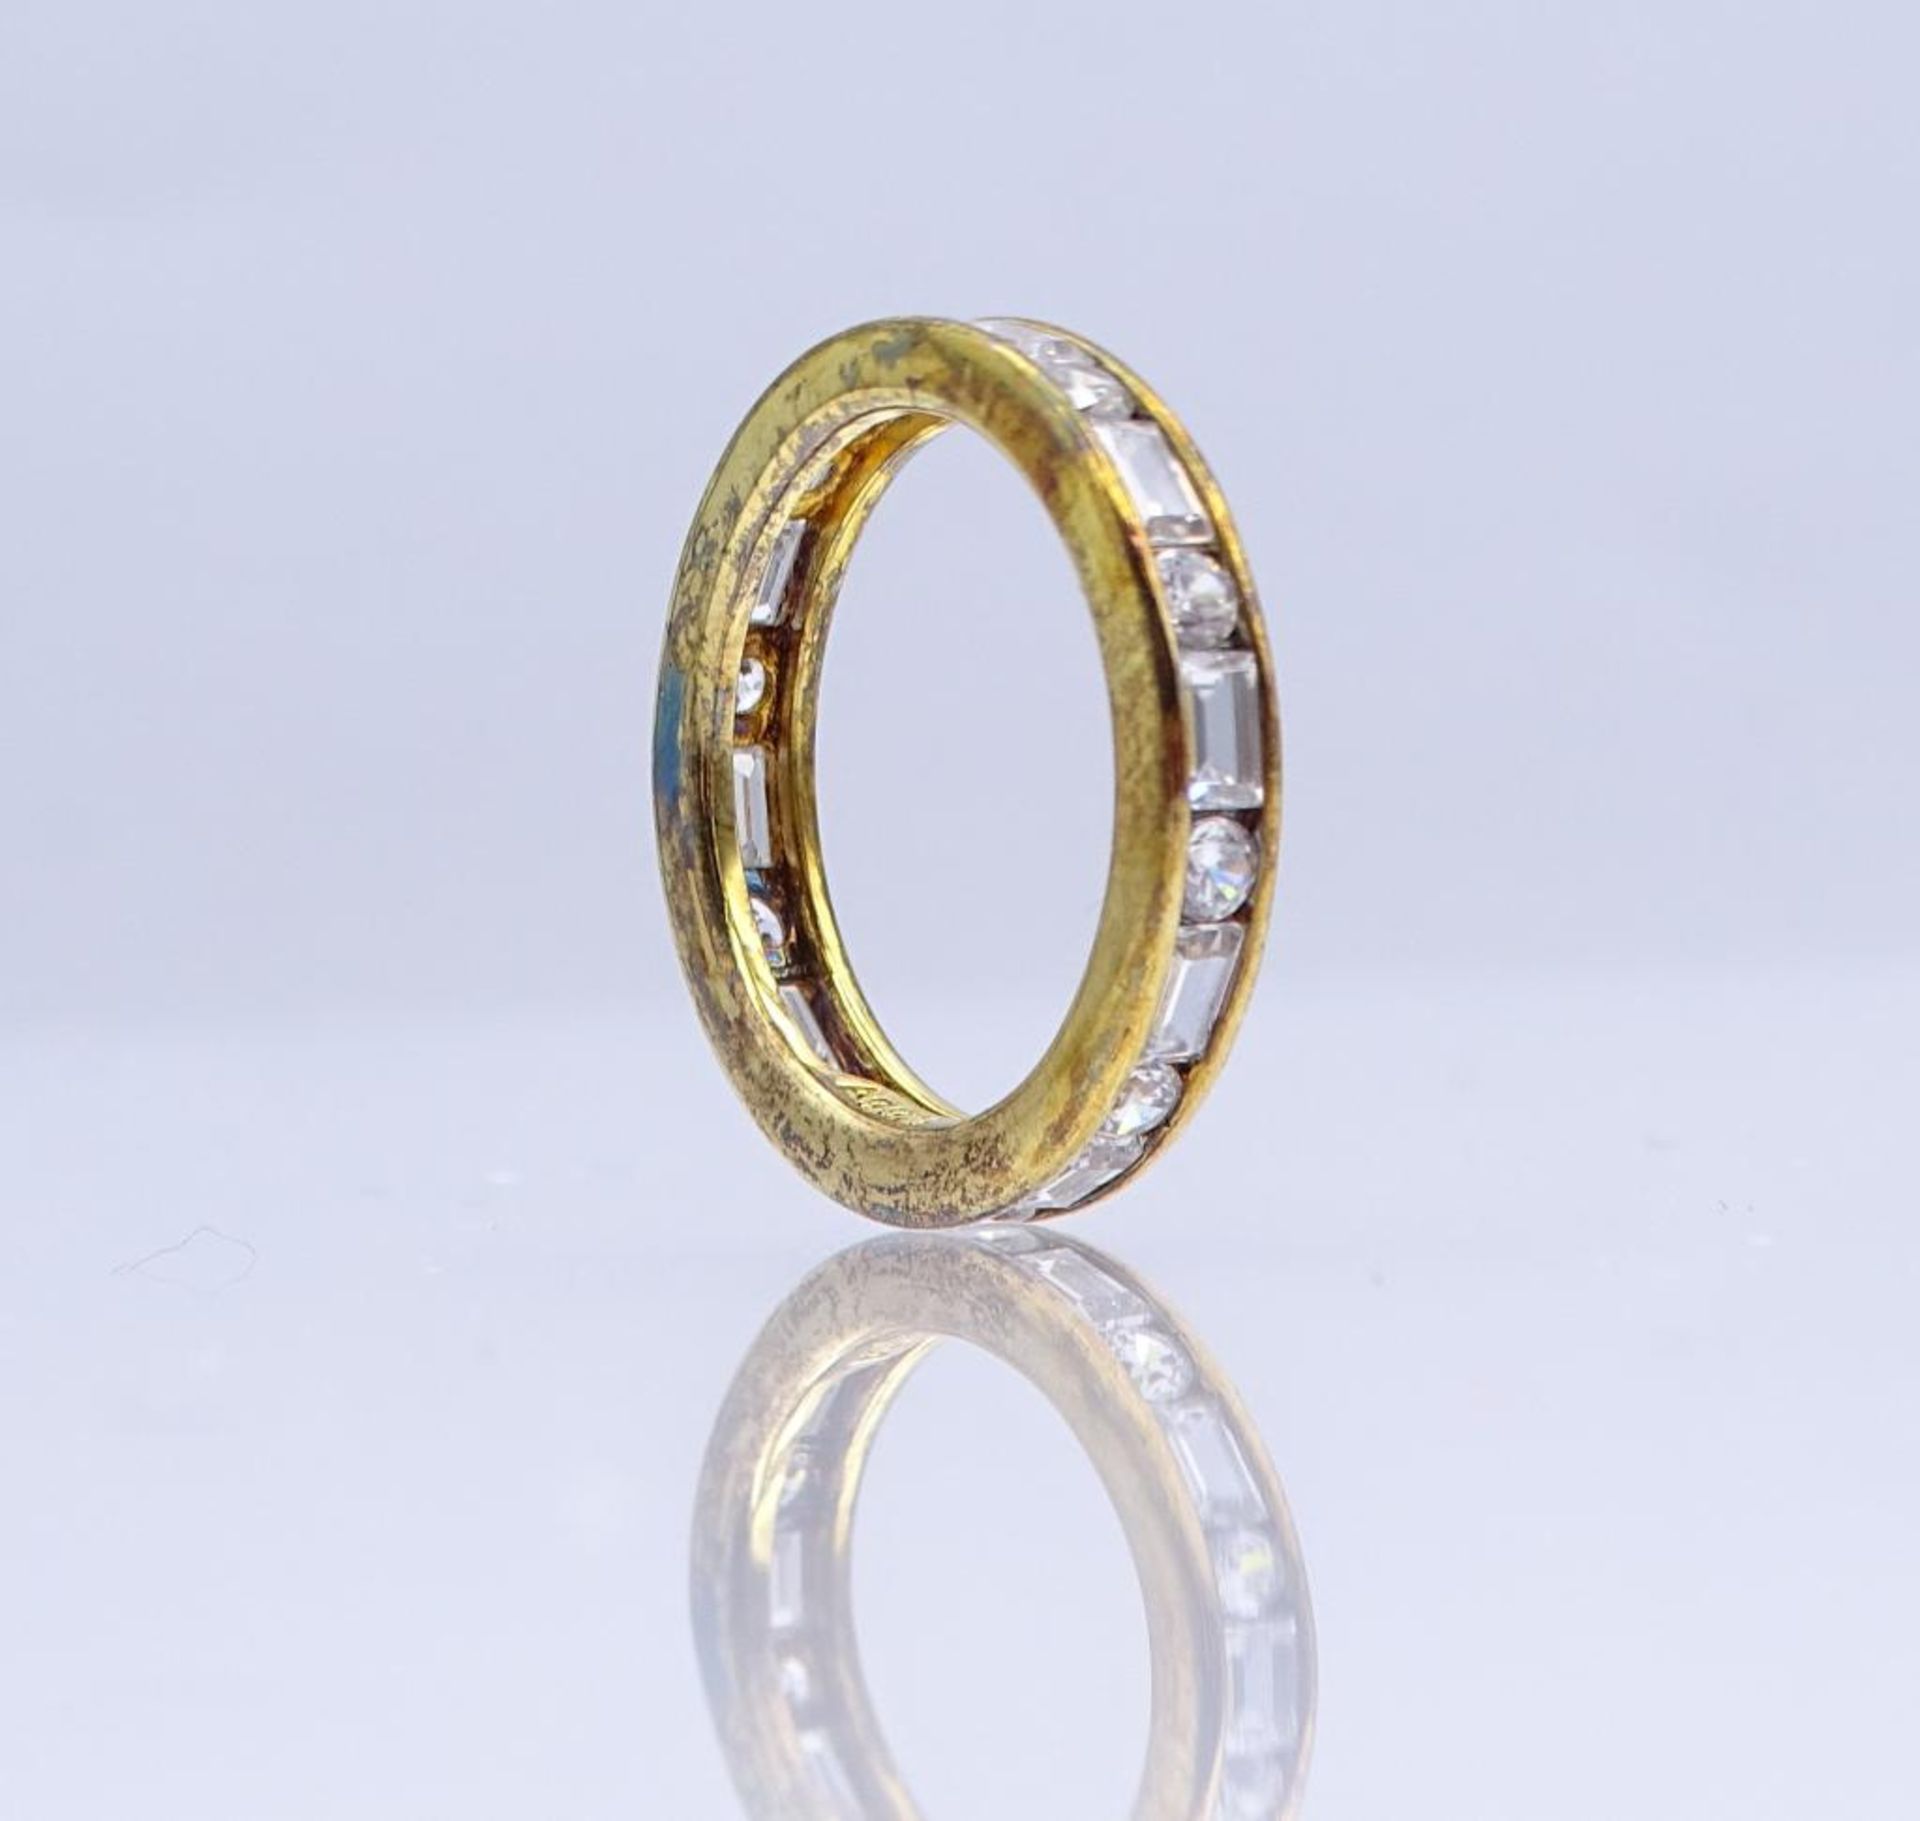 Ring Silber 925/000 vergoldet, mit rund und baguetteförmig fac. Zirkonia, RG 53, 3,5 g- - -22.61 %